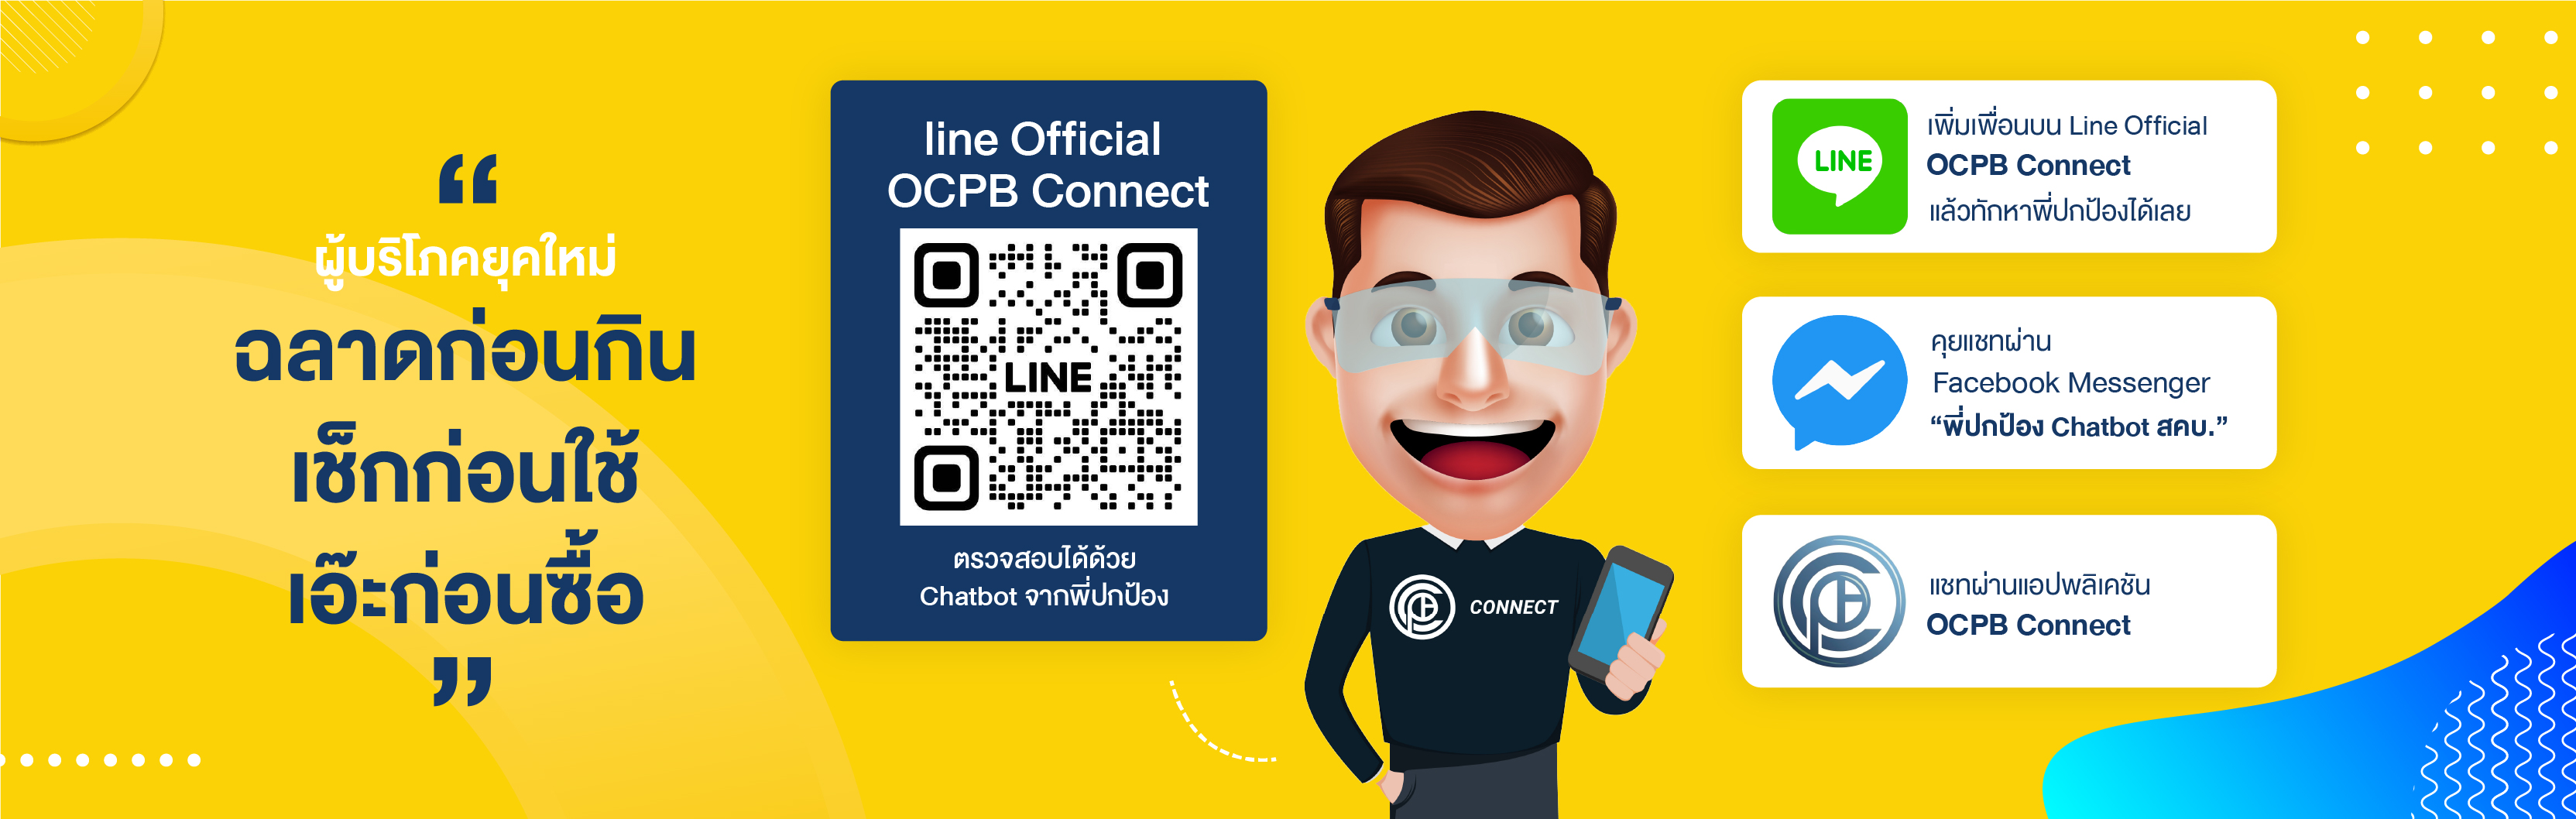 LINE@OCPB Connect